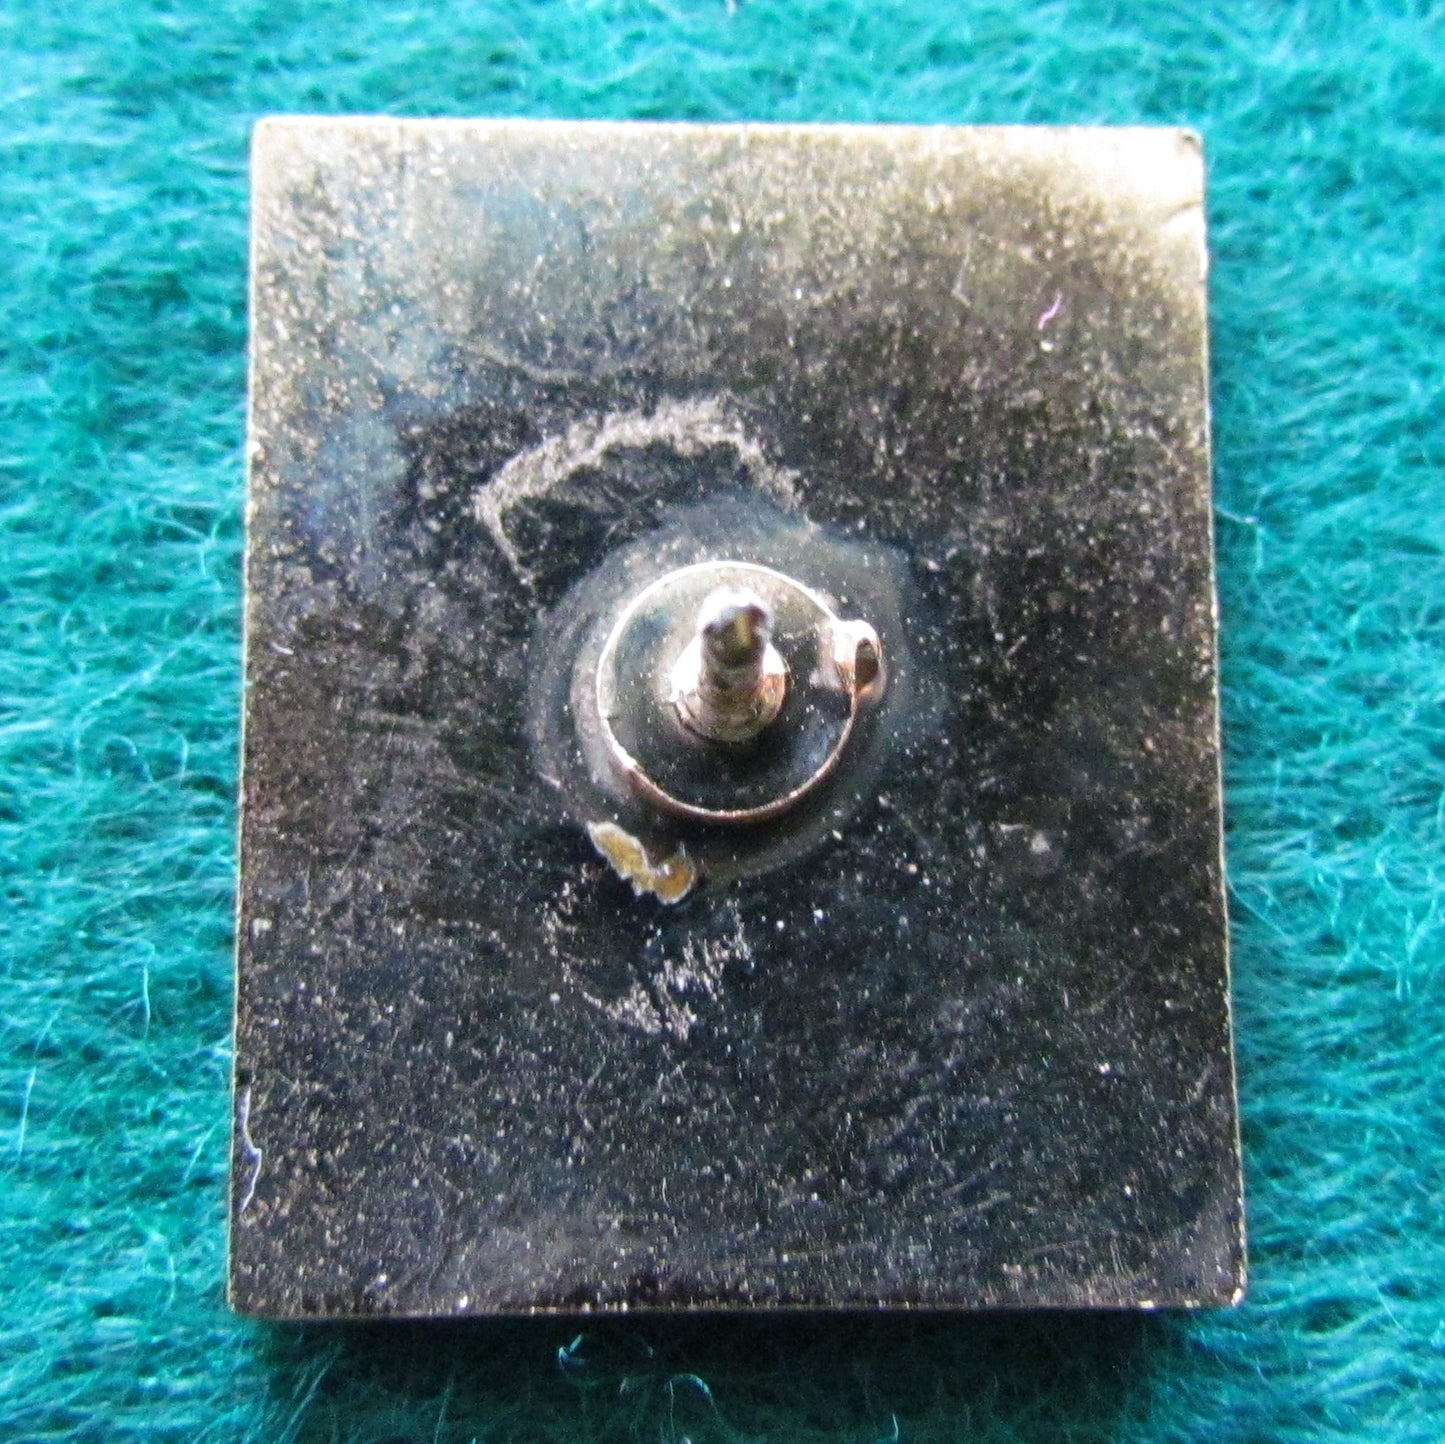 Australian Police 150th Anniversary Tac Pin - 1844 to 1994